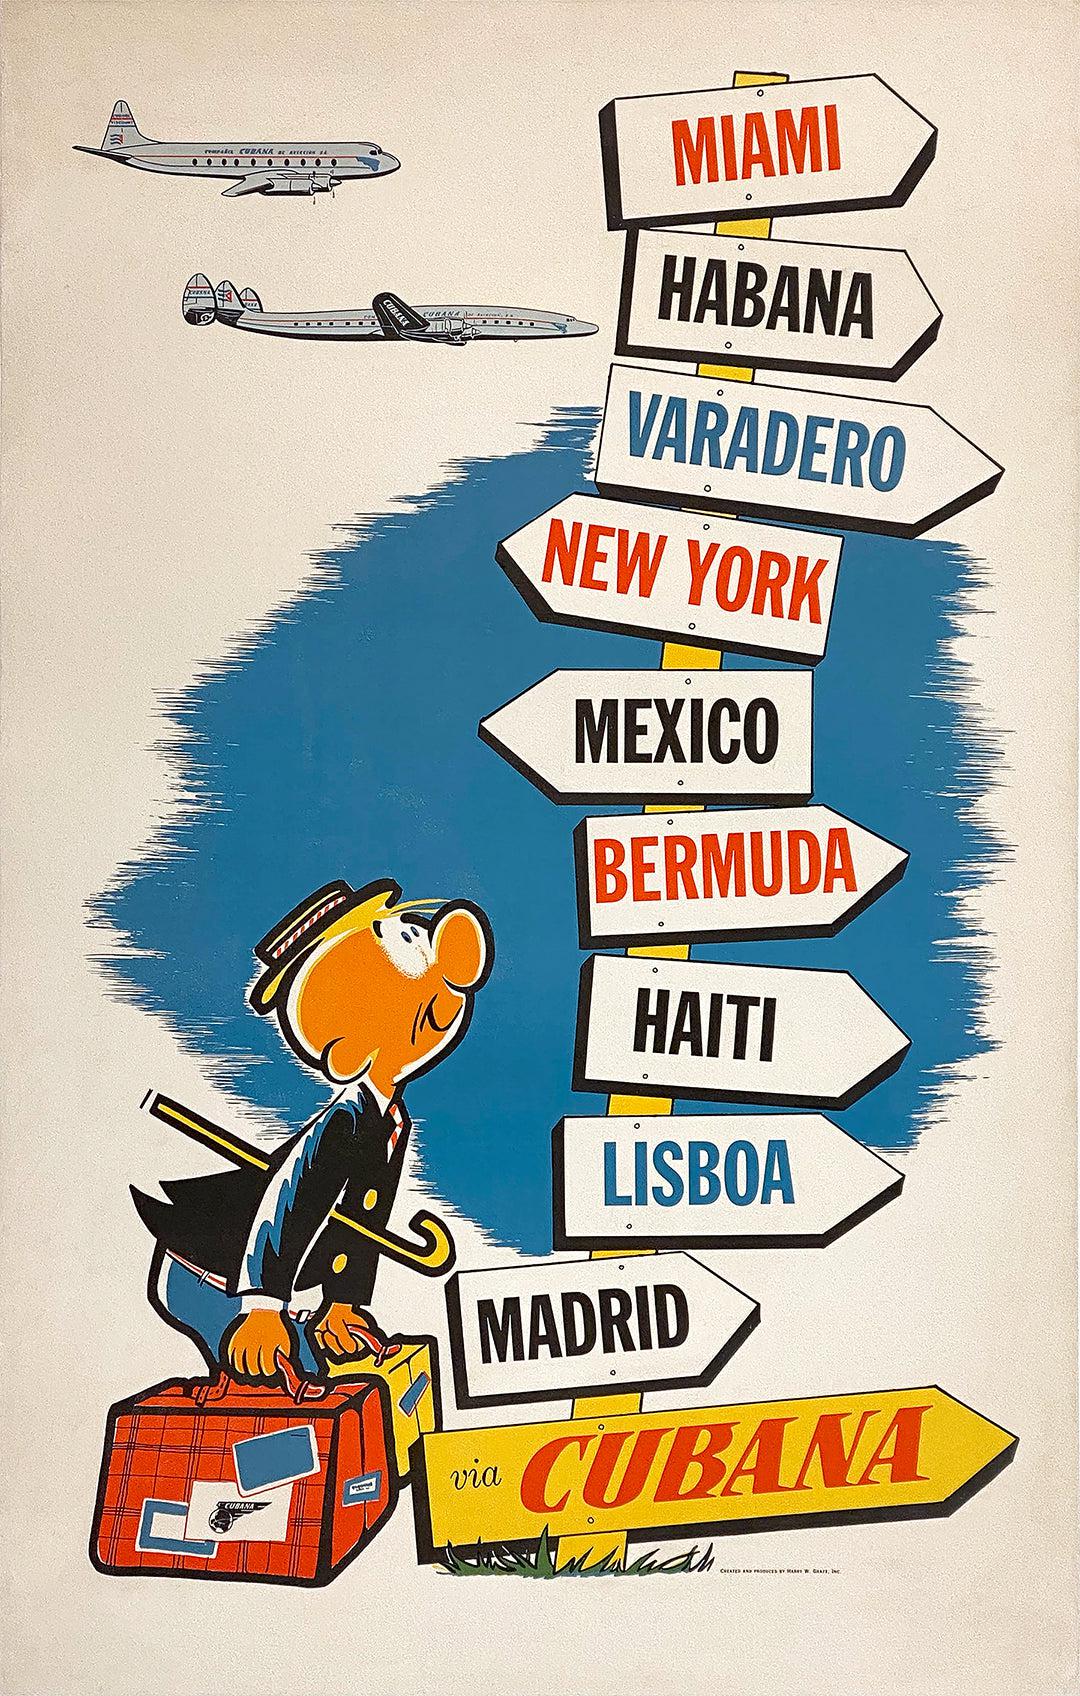 Original Vintage Poster Via Cubana Airlines by Harry Graff c1956